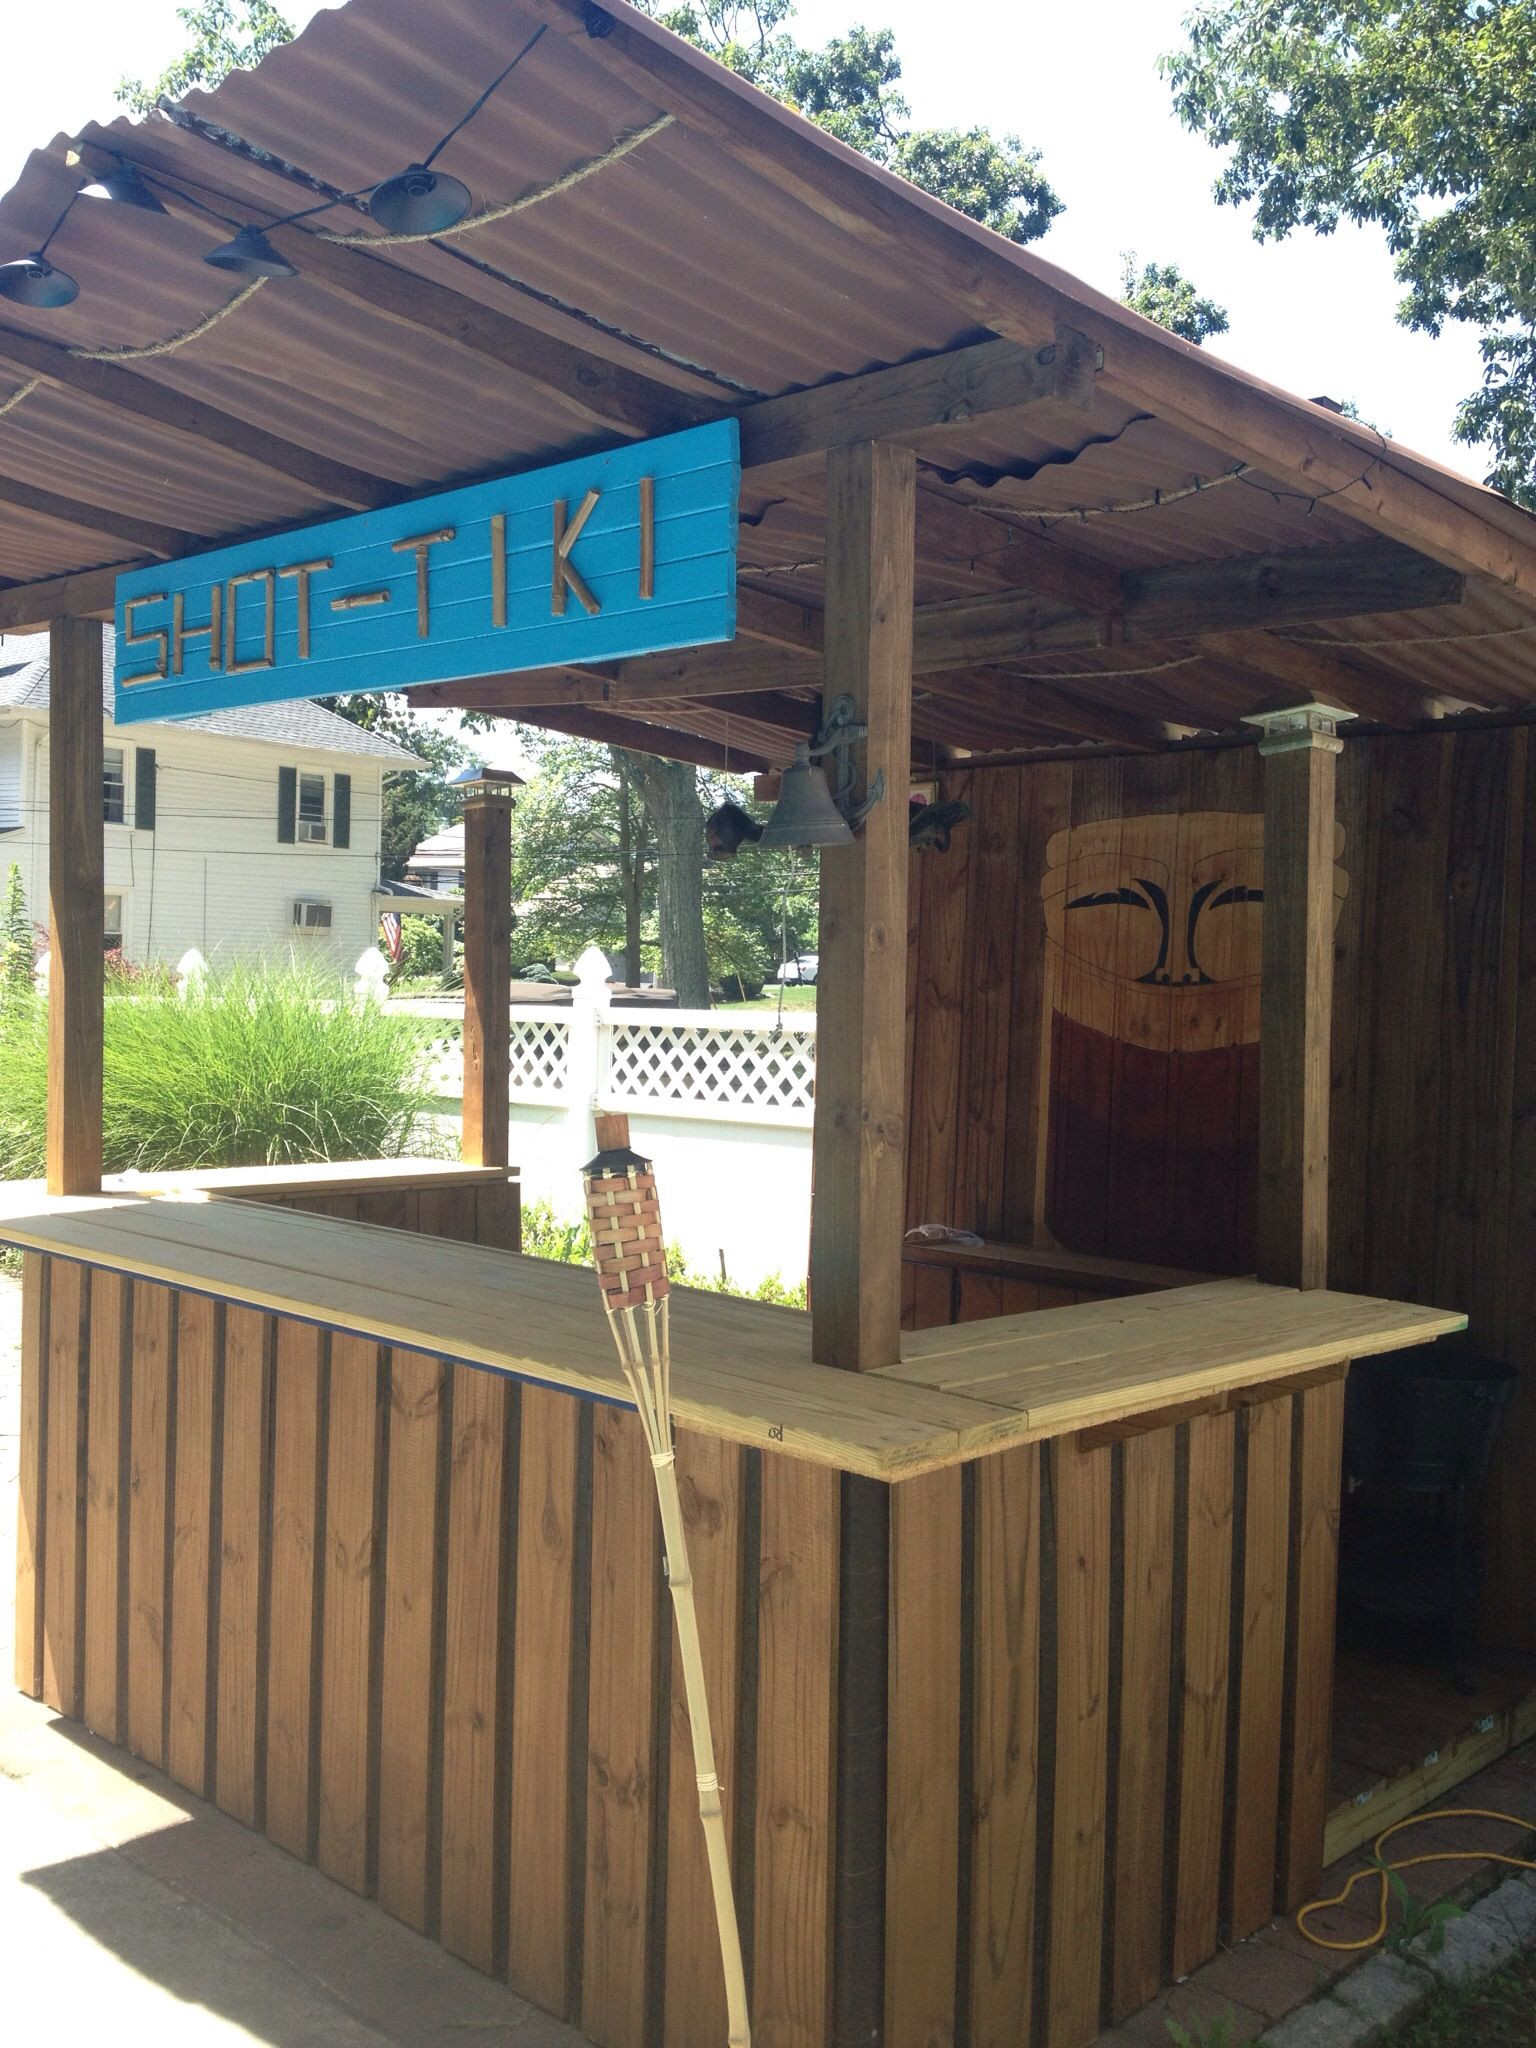 Best ideas about Tiki Bar DIY
. Save or Pin DIY Tiki Bar my hubby built Now.